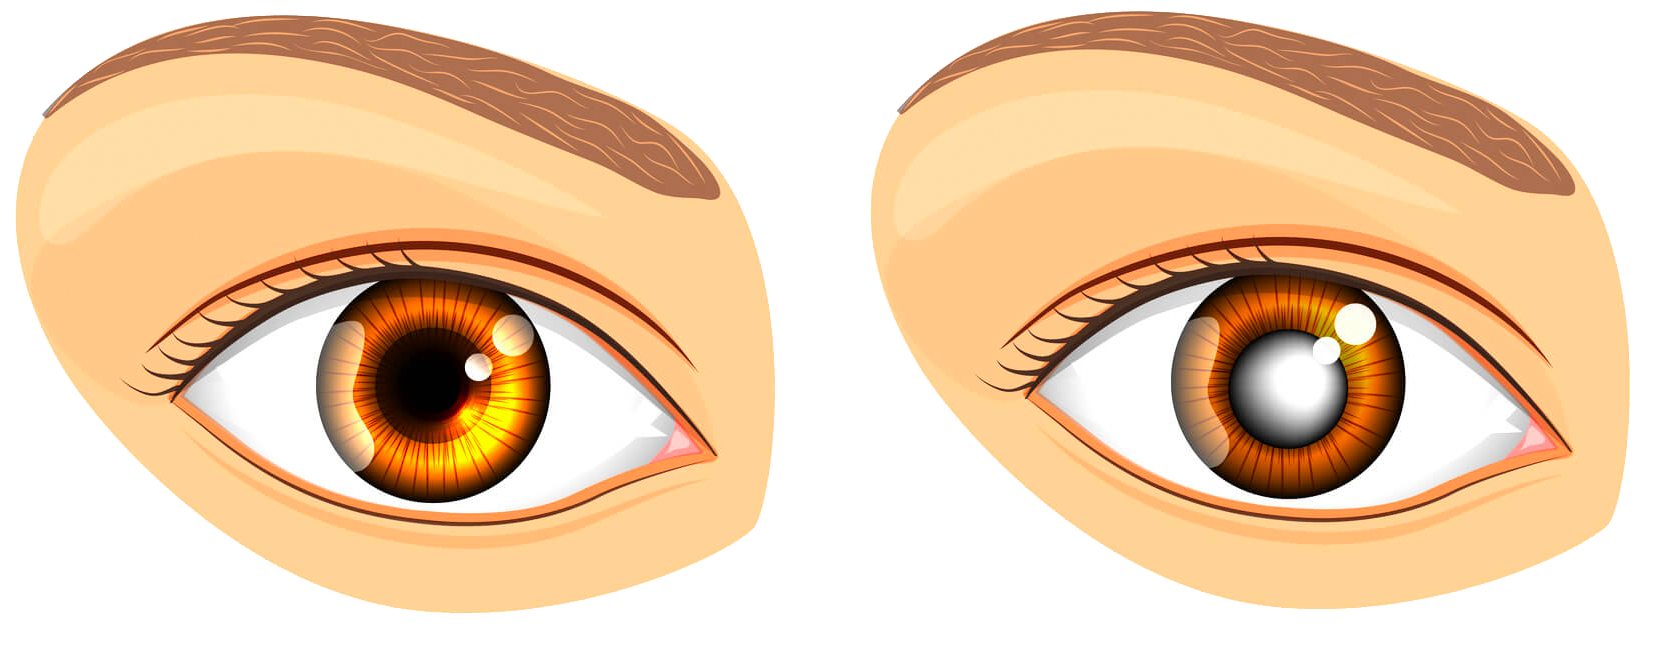 Diagram of a healthy eye vs an eye with cataract